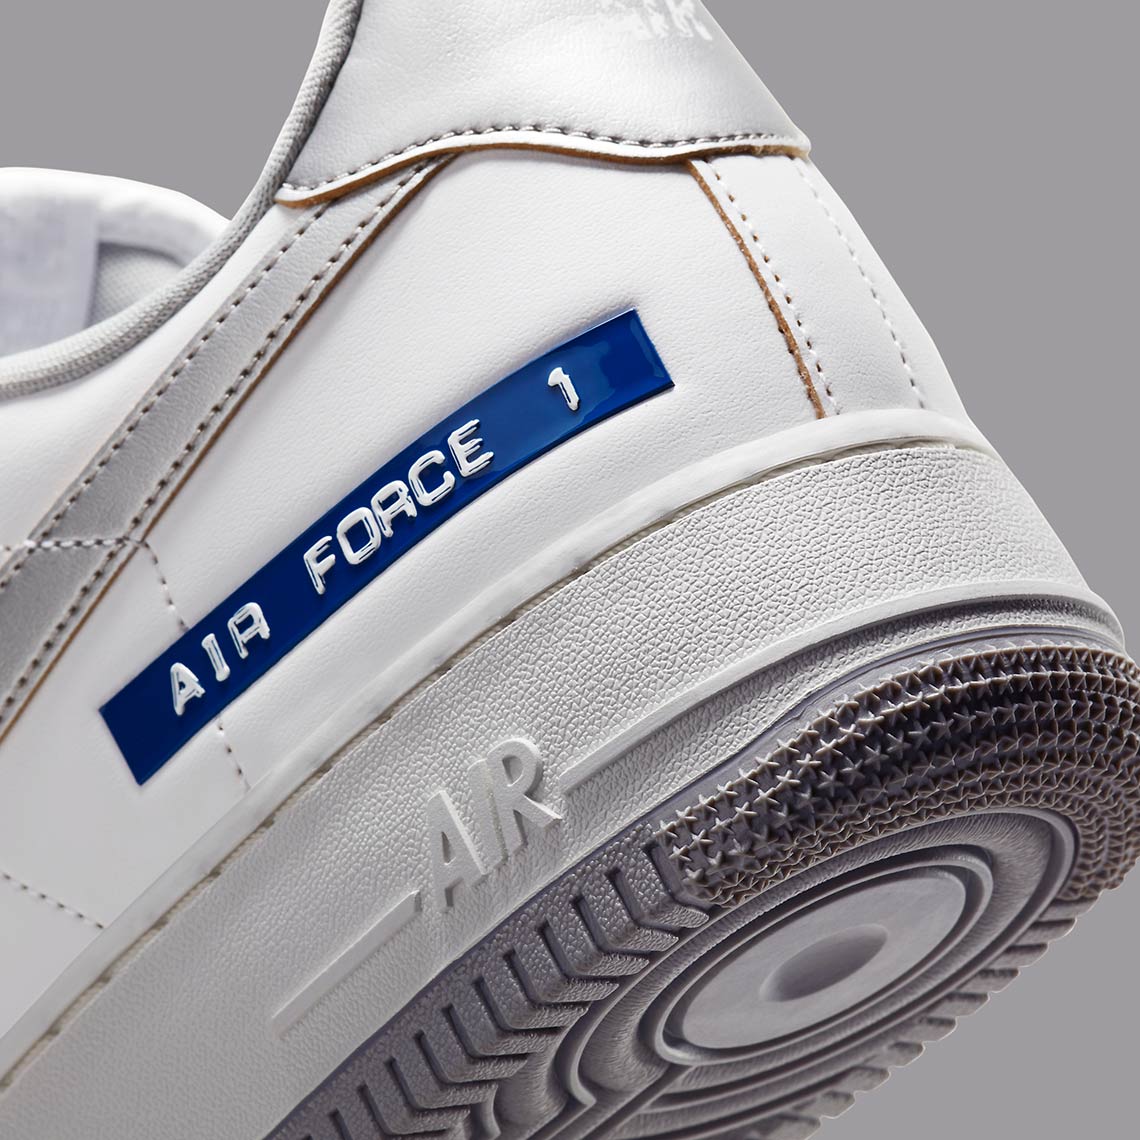 Nike Air Force low "Label Maker" 